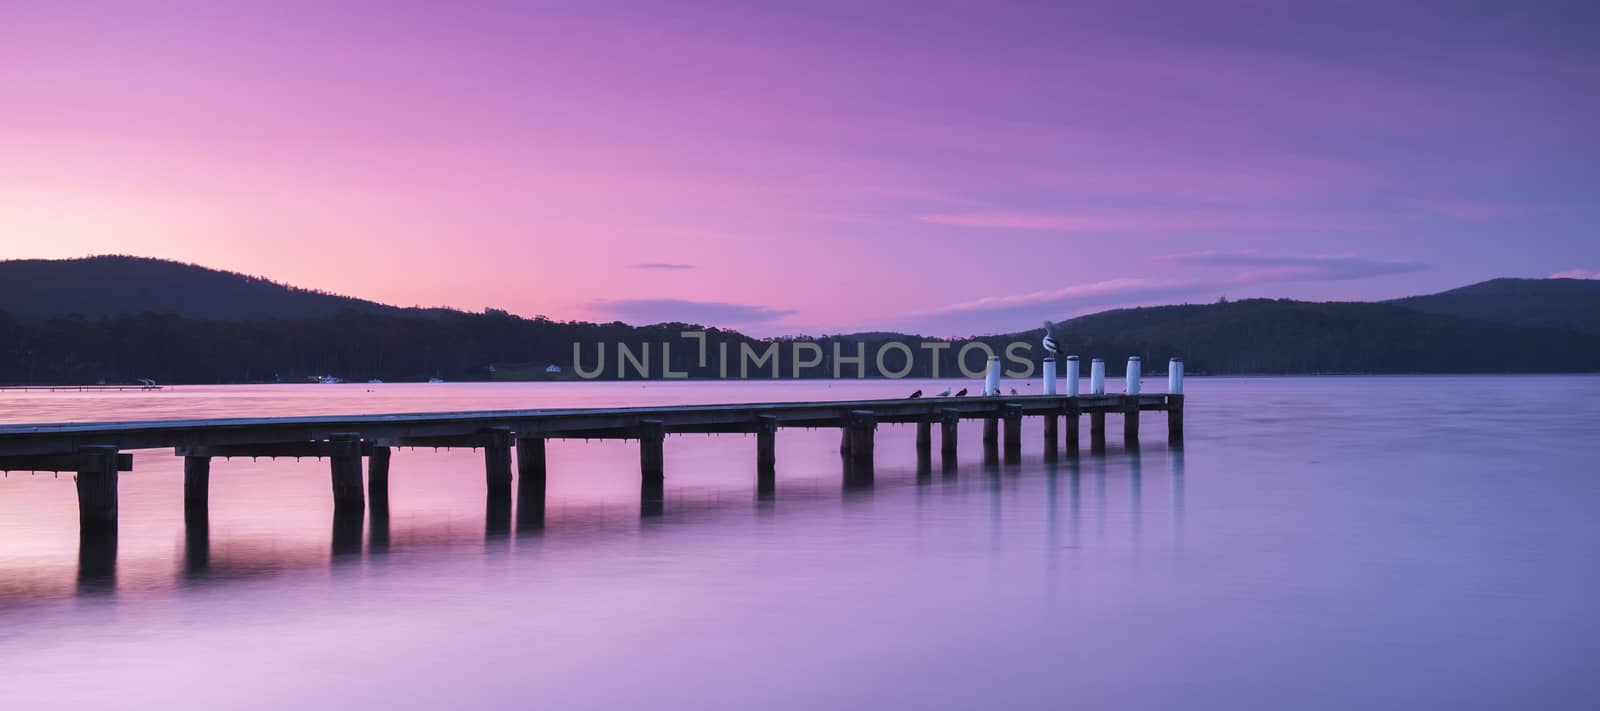 Port Arthur pier and hillside at dusk in Tasmania, Australia.